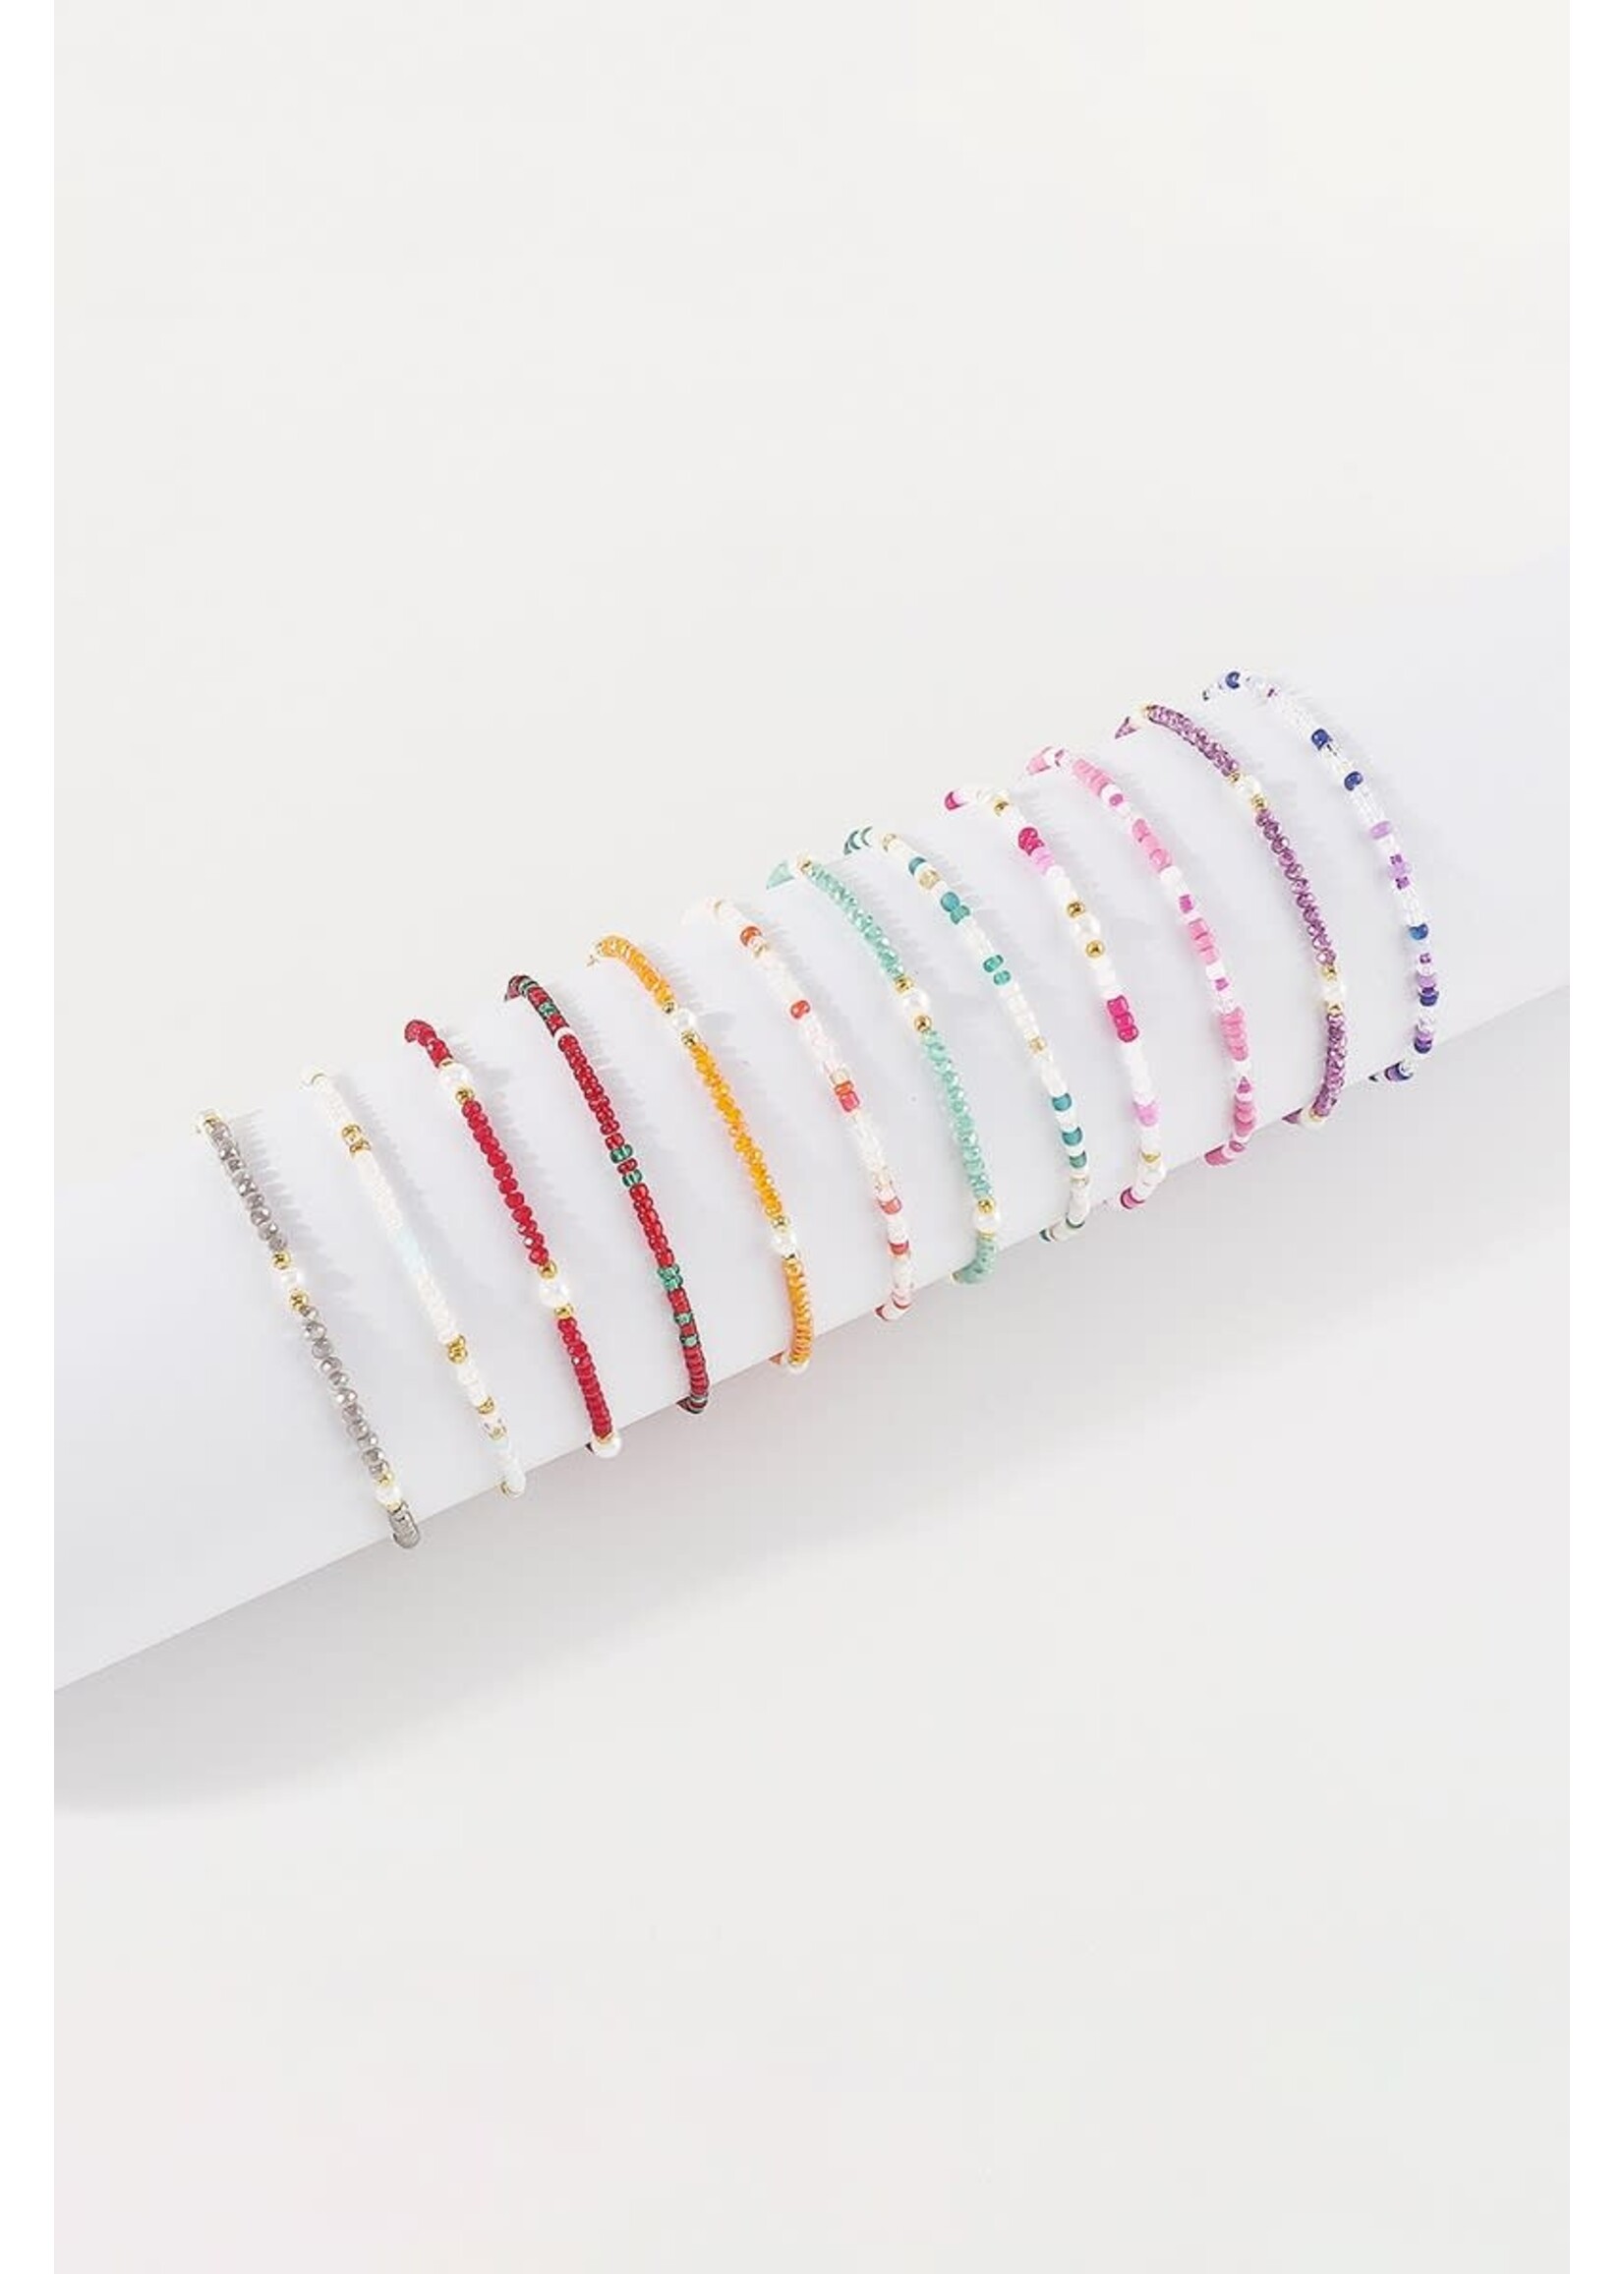 Mermaid Beads Stretch Bracelets Set